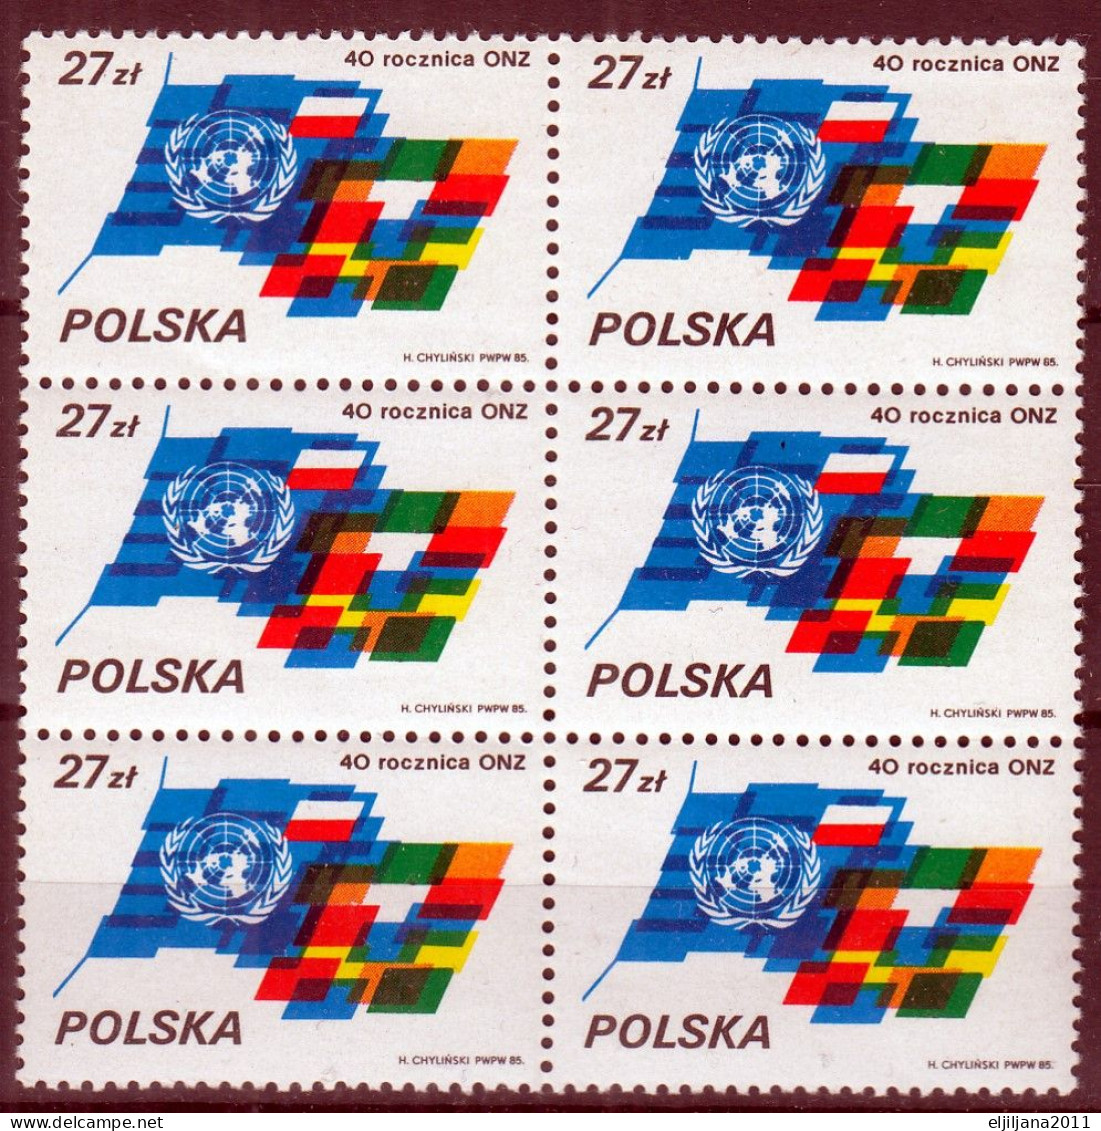 ⁕ Poland / Polska 1985 ⁕ United Nations 40th UN Mi.3004 ⁕ MNH Block Of 6 - Ungebraucht